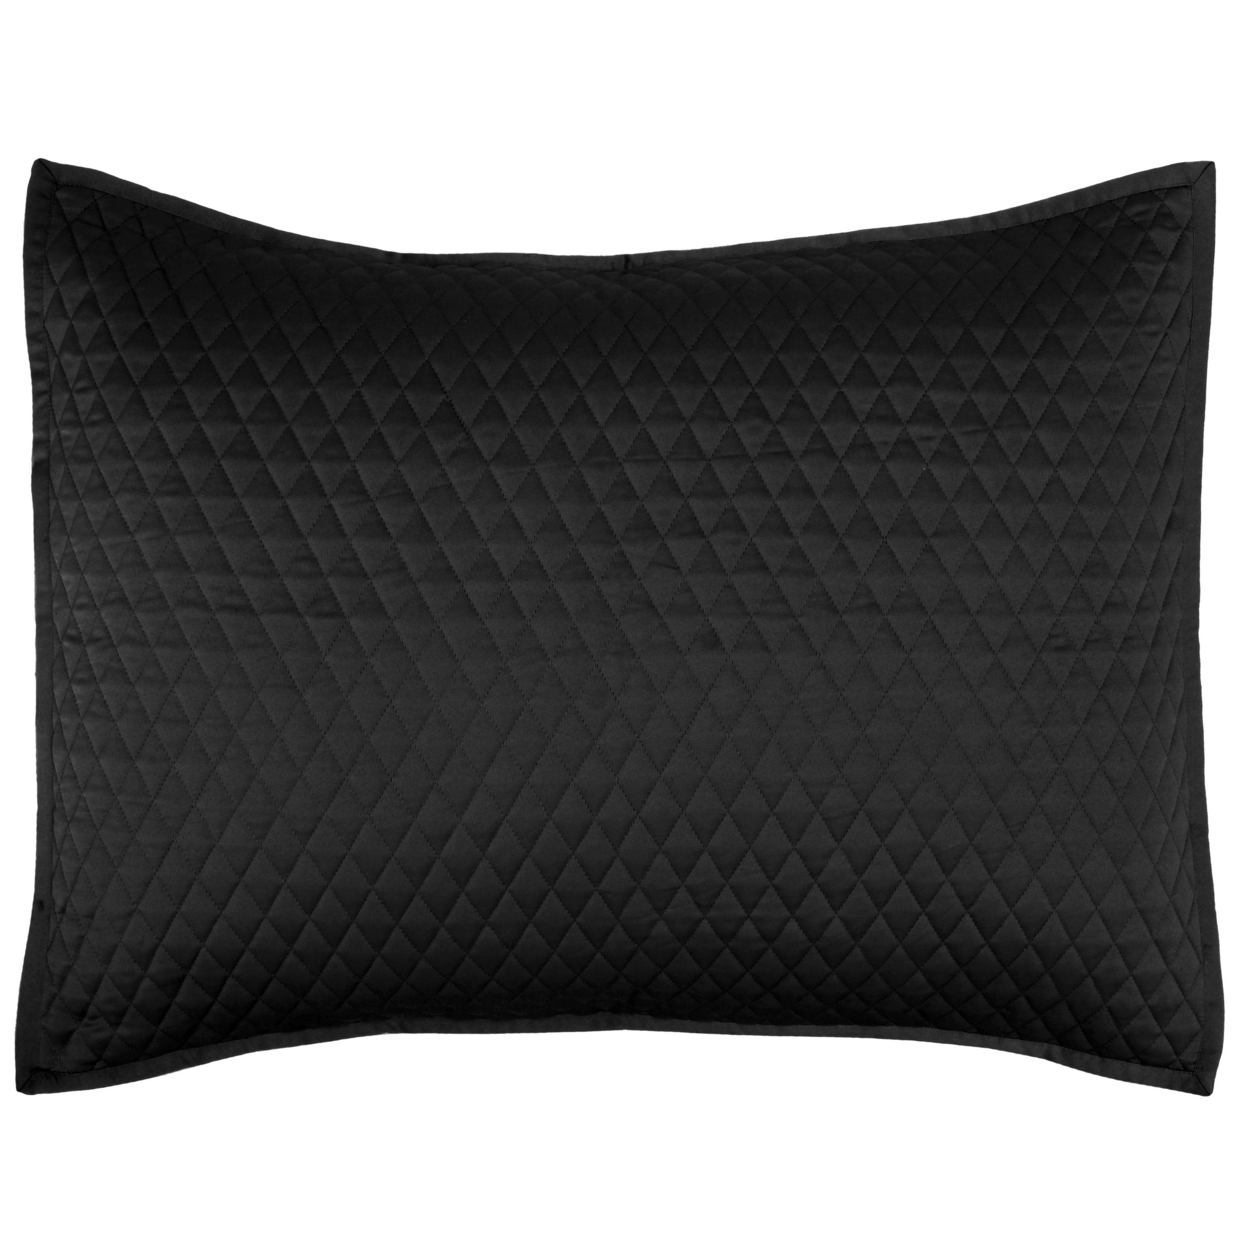 Kahn 26 Inch Hand Stitched Standard Pillow Sham, Cotton Fill, Matte Black- Saltoro Sherpi